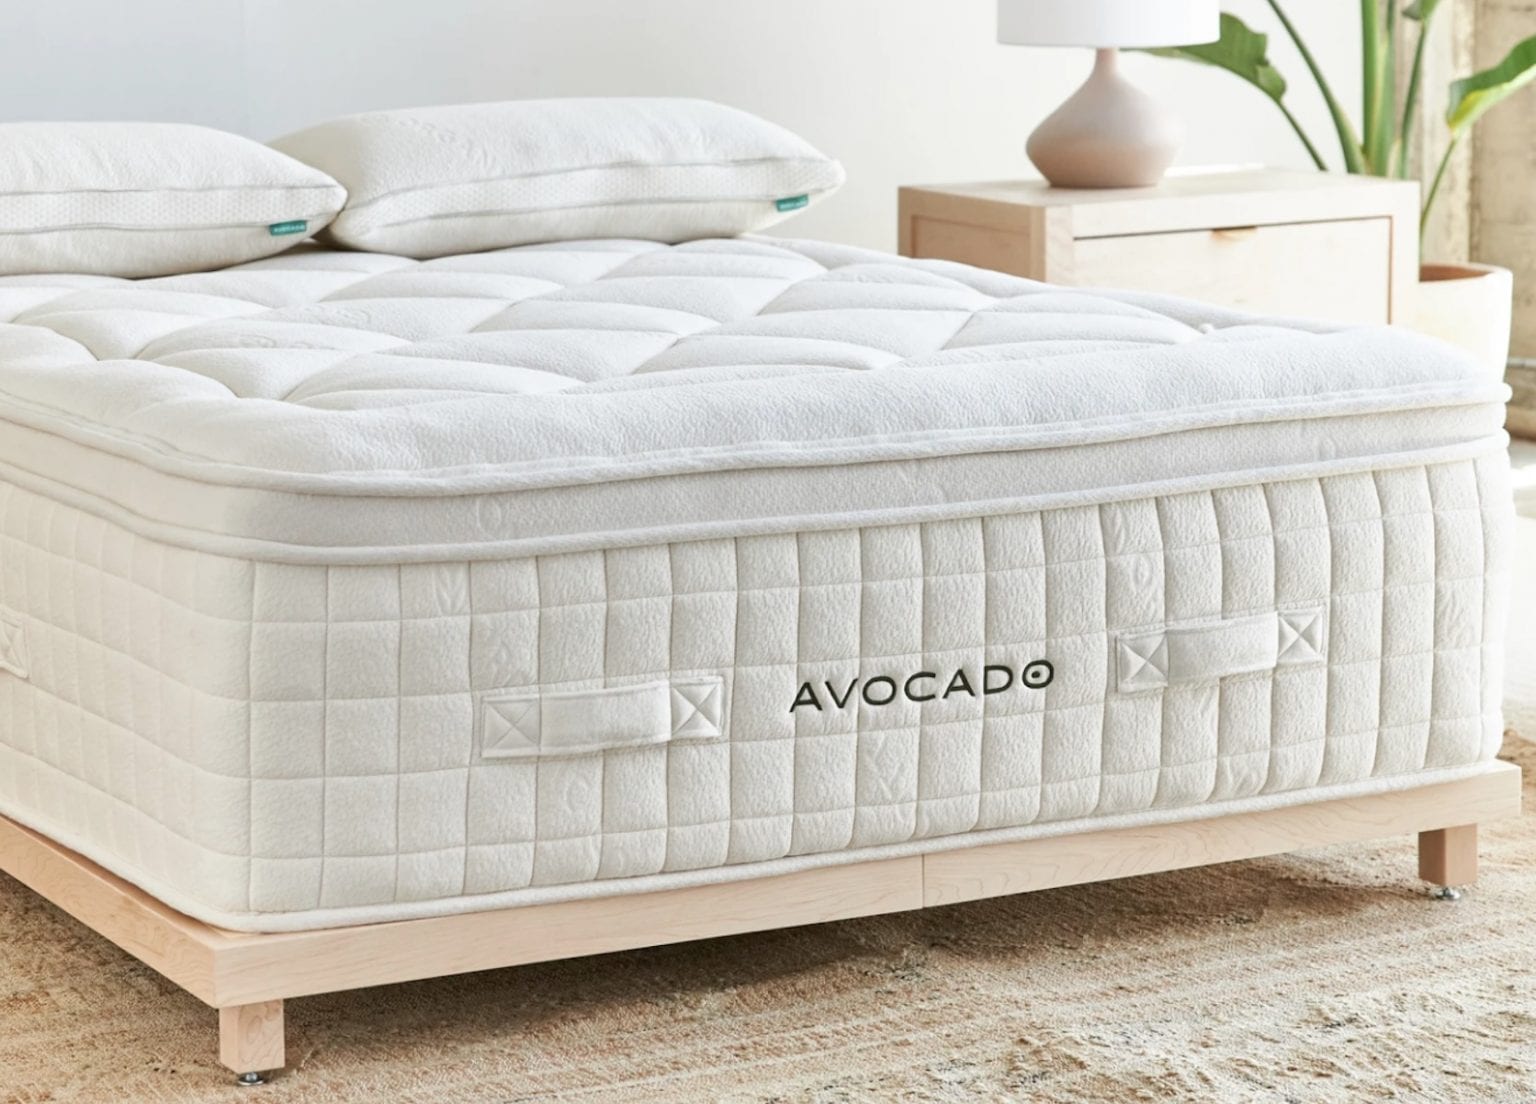 avocado luxury mattress review